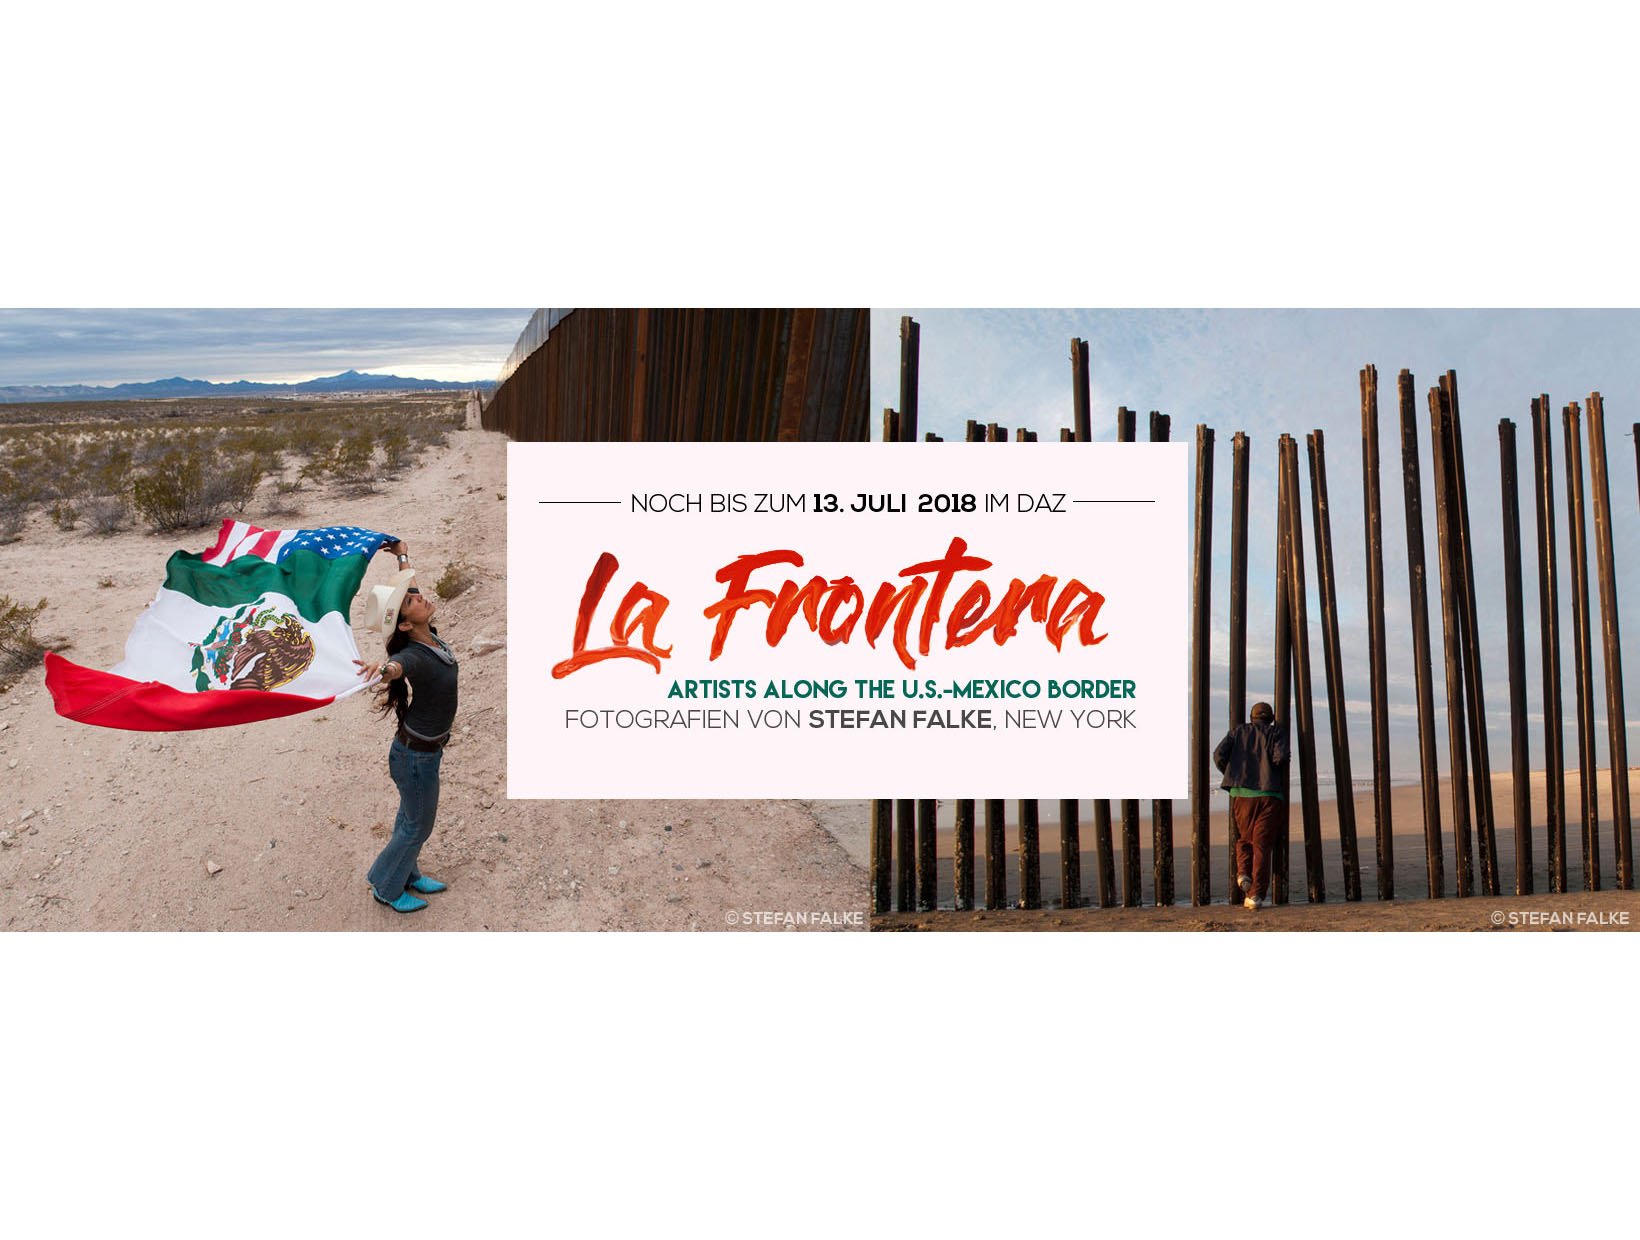 La-frontera_banner.JPG